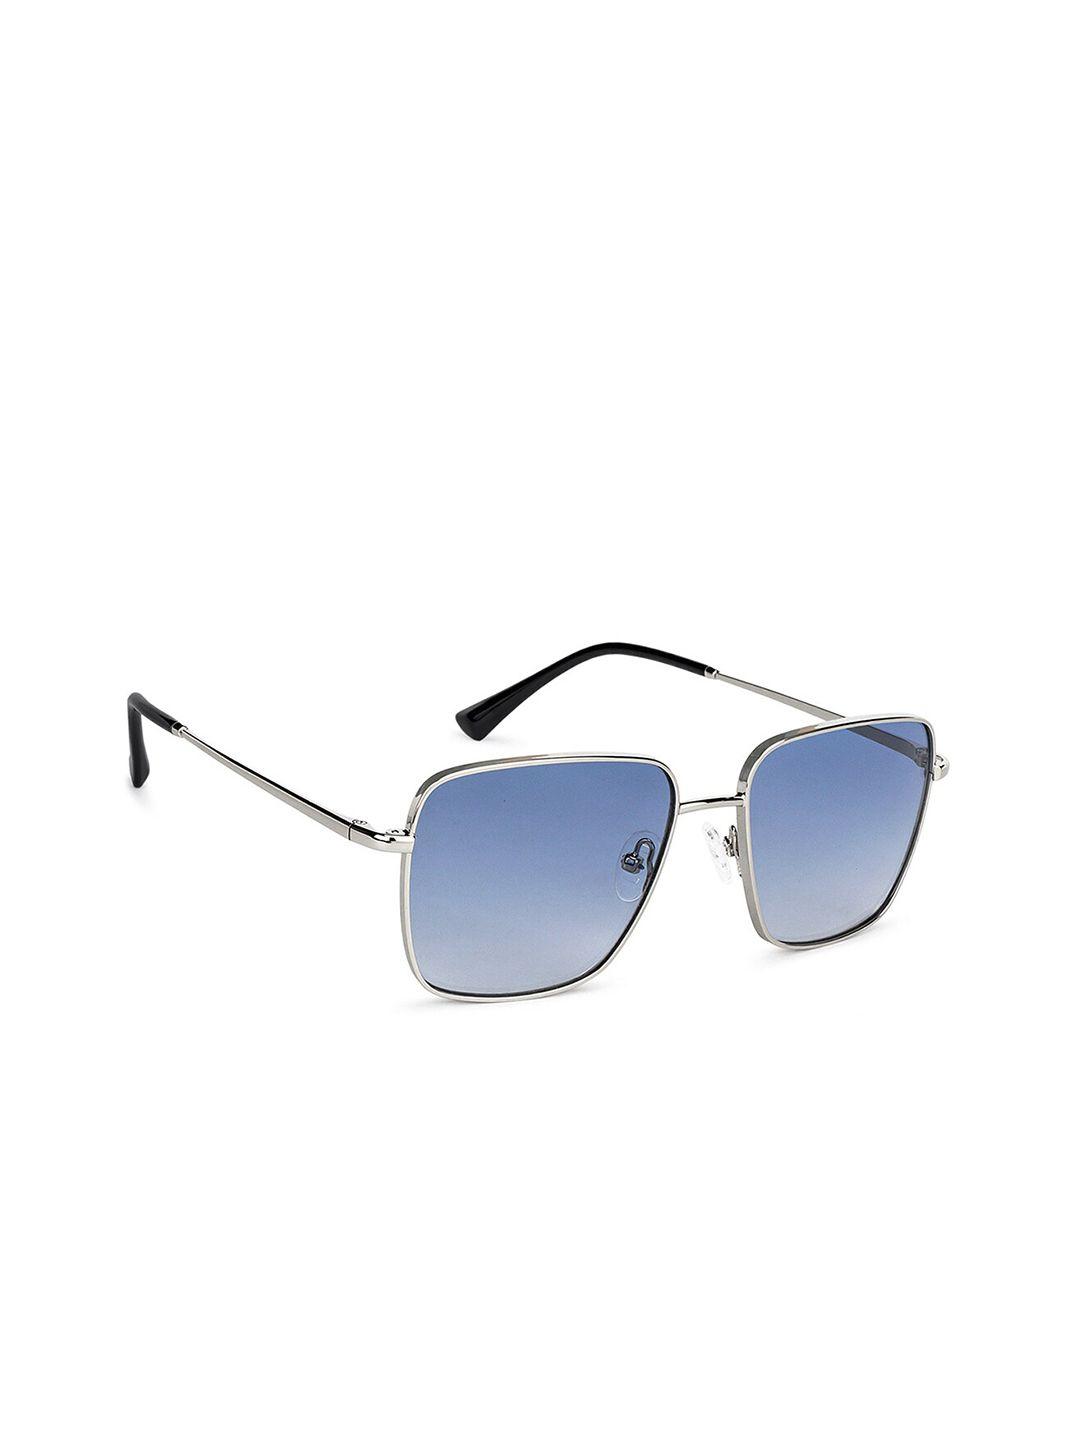 John Jacobs Full Rim Square Sunglasses with UV Protected Lens 137154